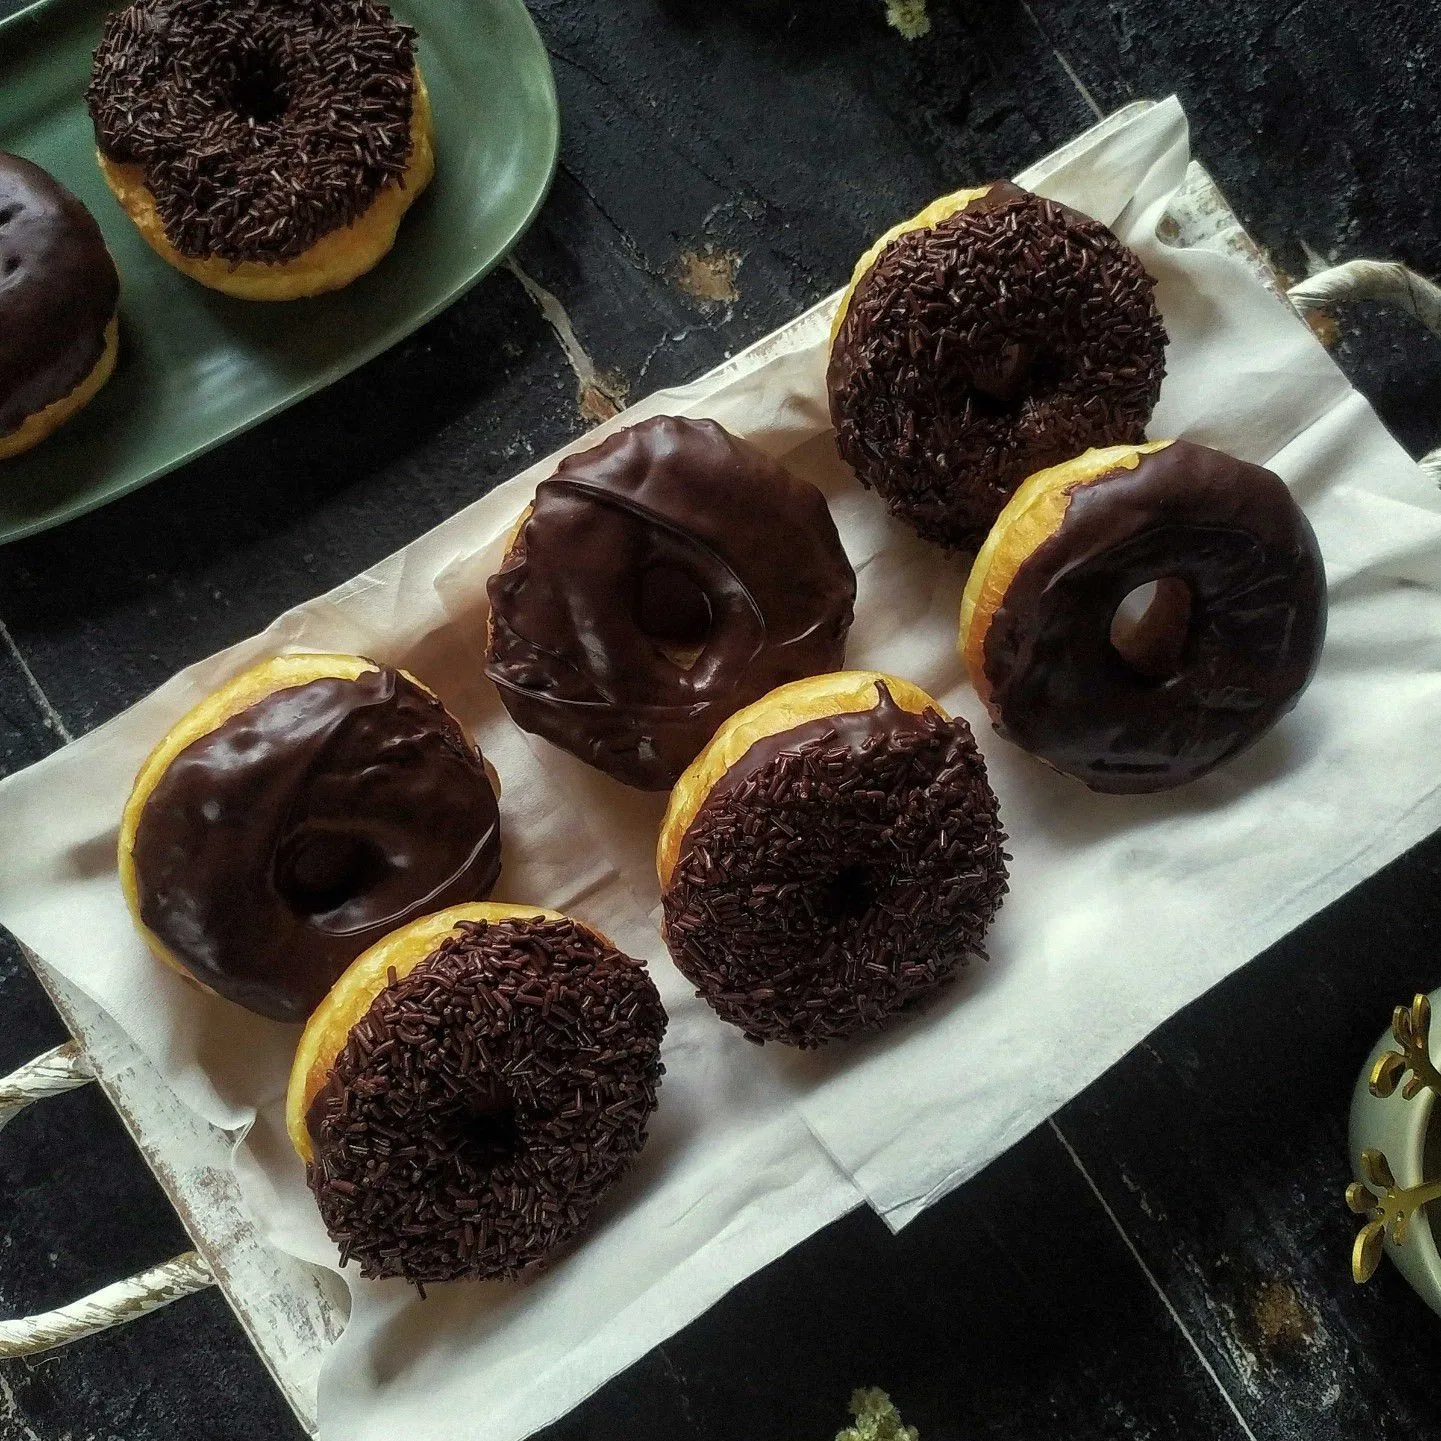 Chocolate Doughnut #JagoMasakMinggu3Periode3